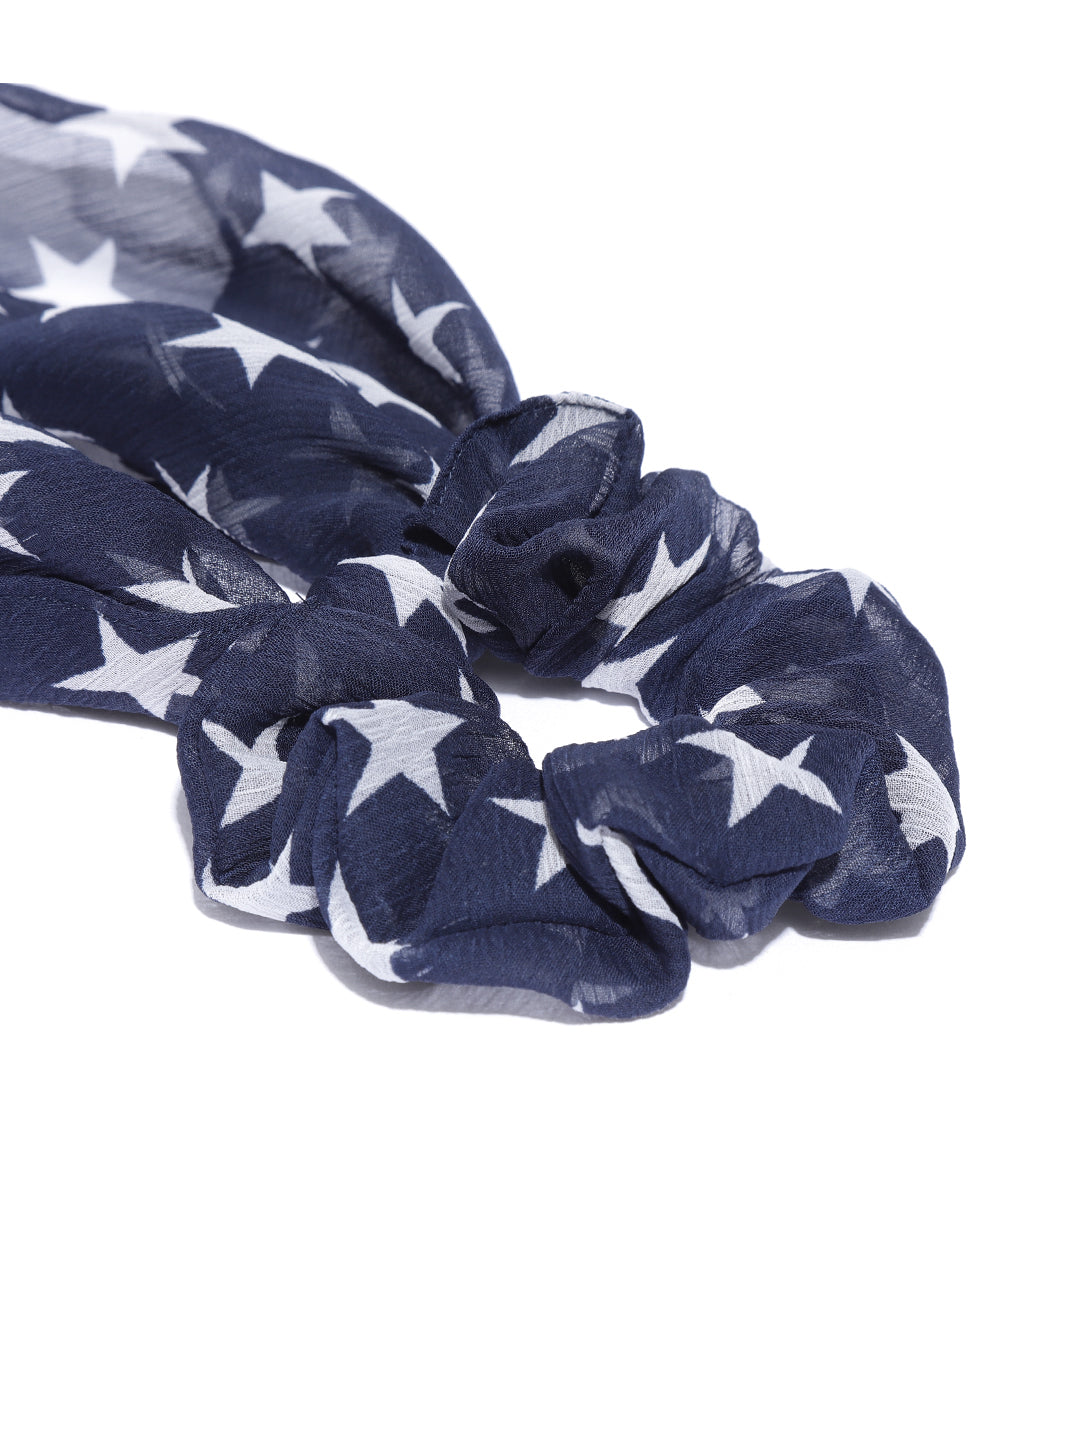 Blueberry white star printed navy blue ruffle scrunchie